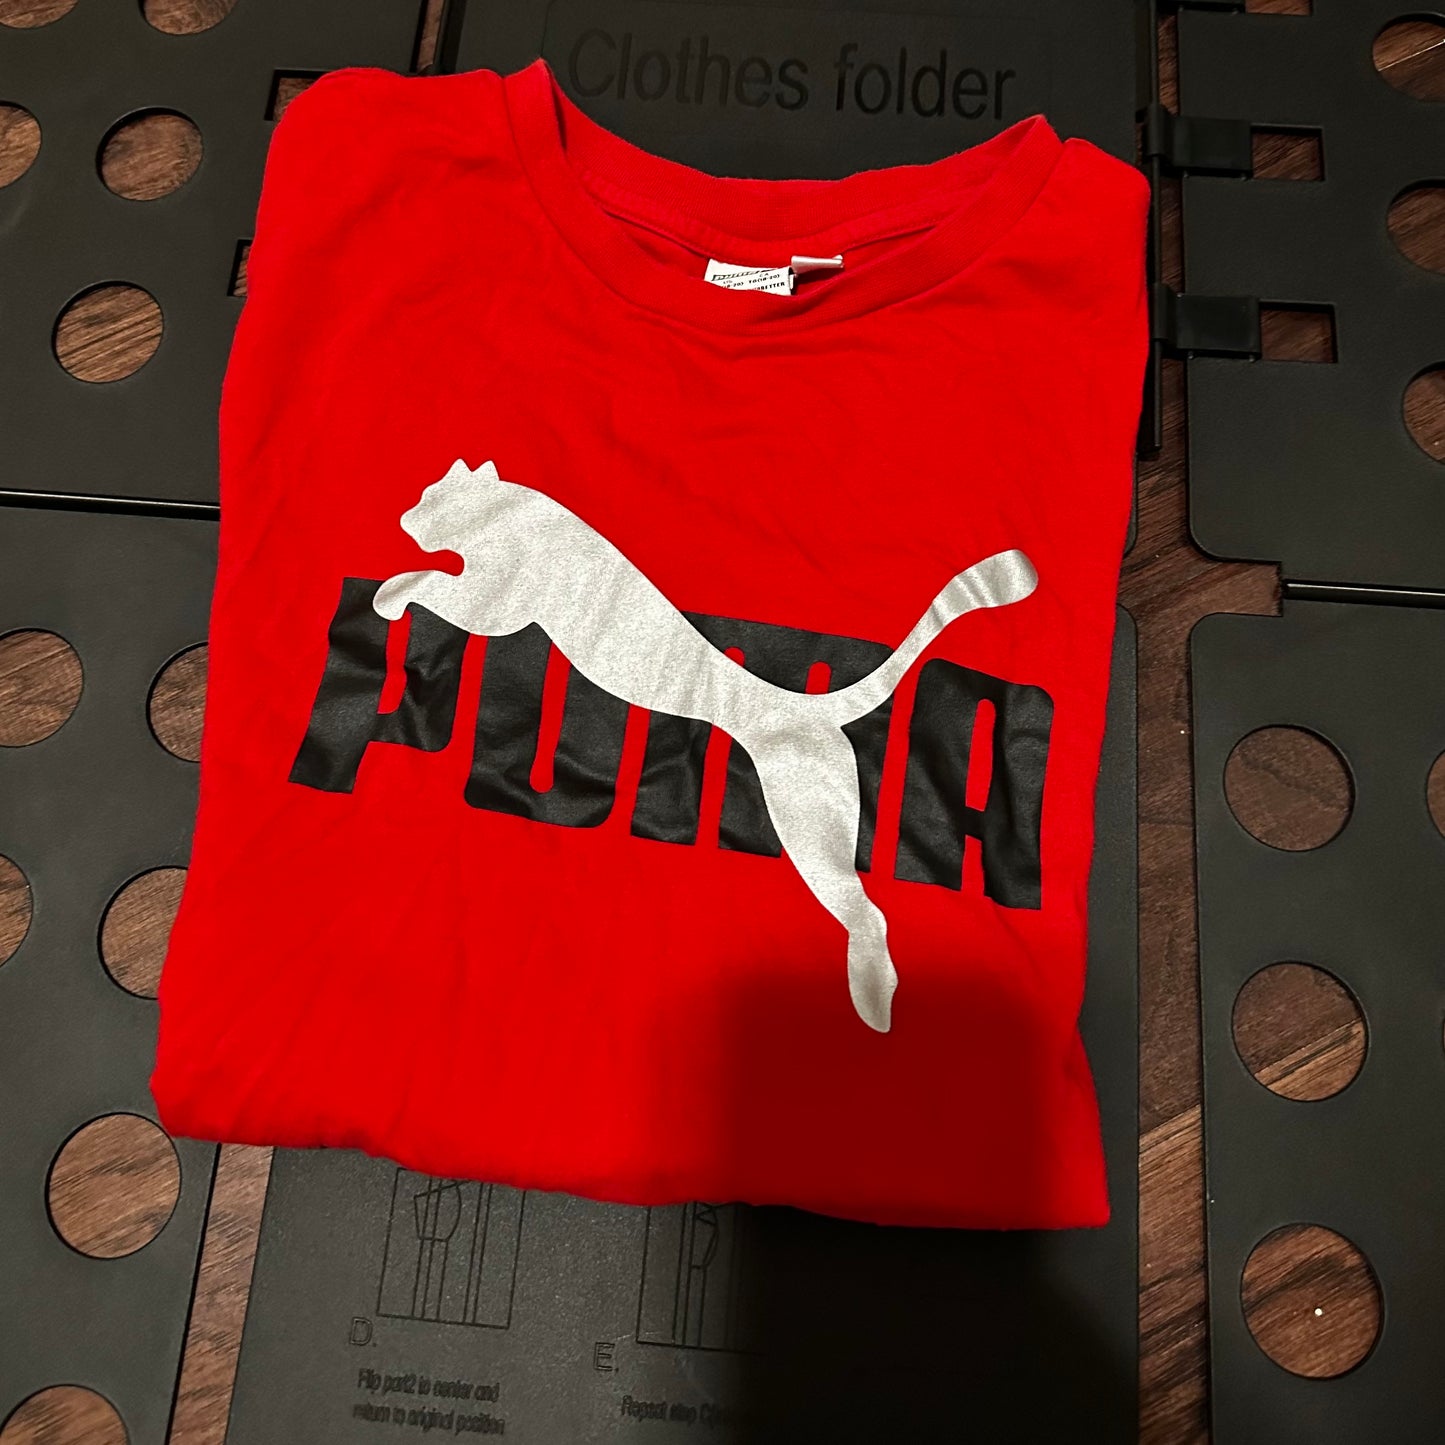 Puma cotton red shirt - Youth Large